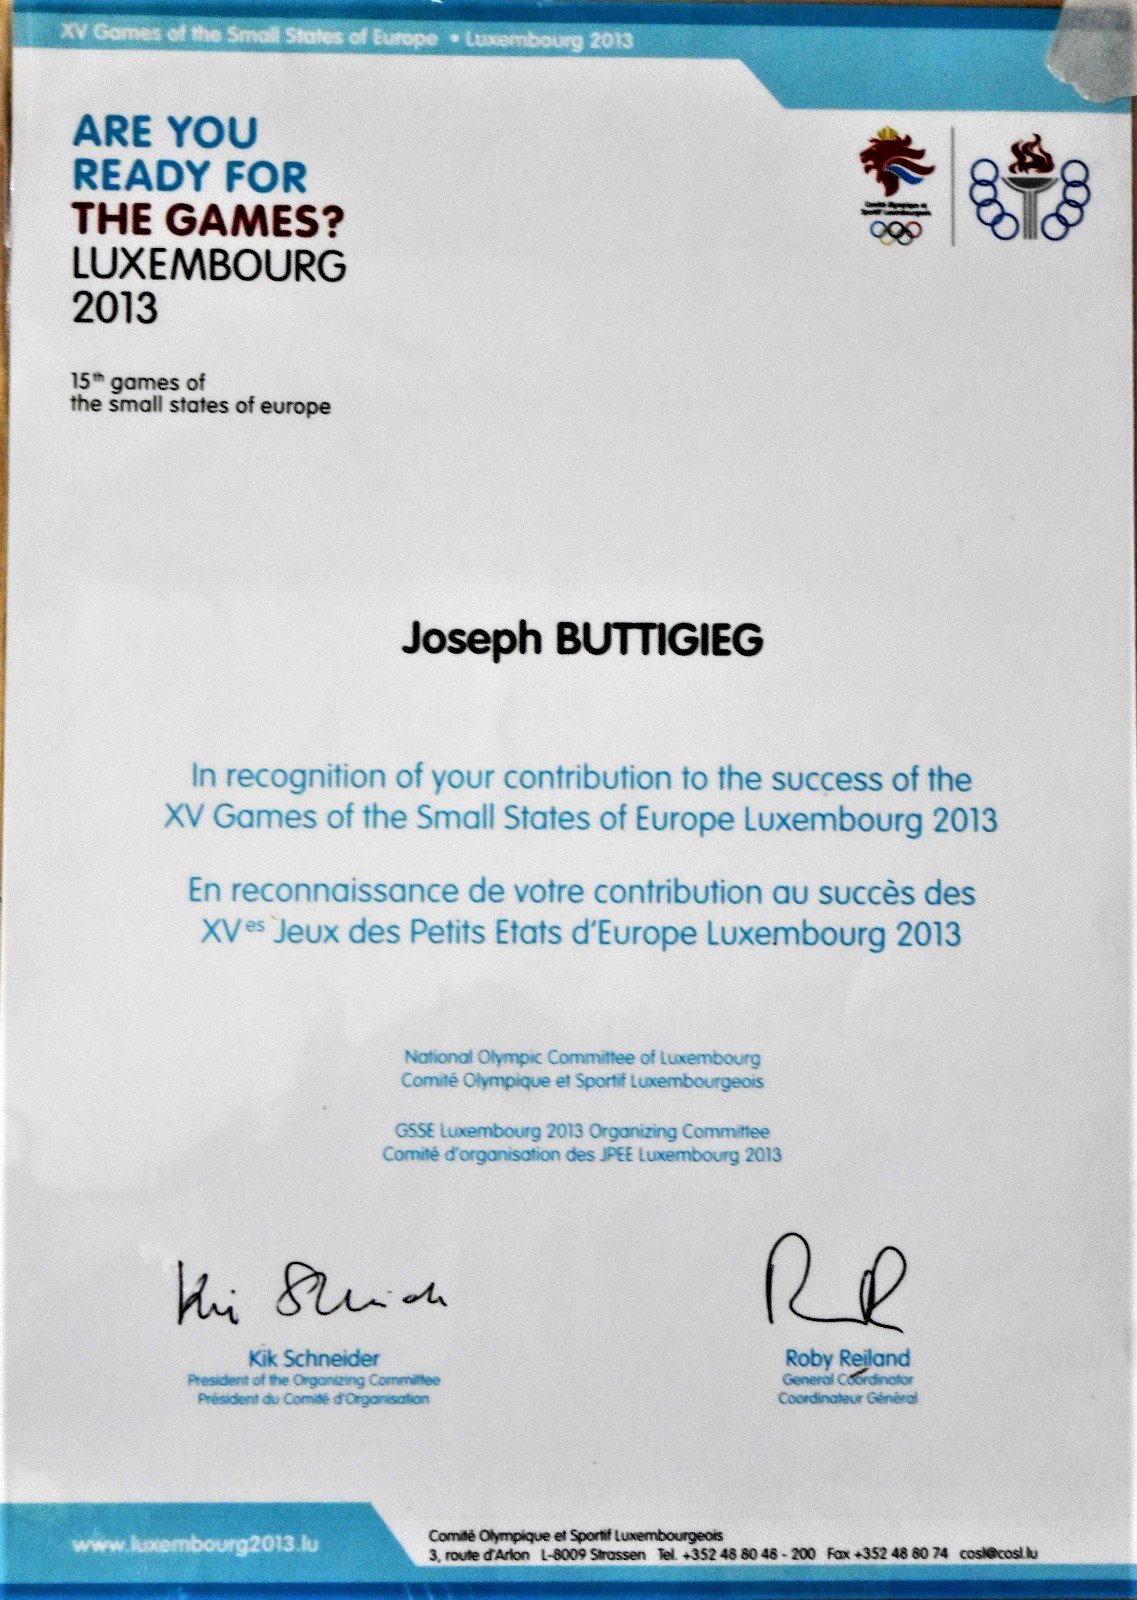 gsse-2013-certificate - Joseph Buttigieg - Sports Massage Therapist